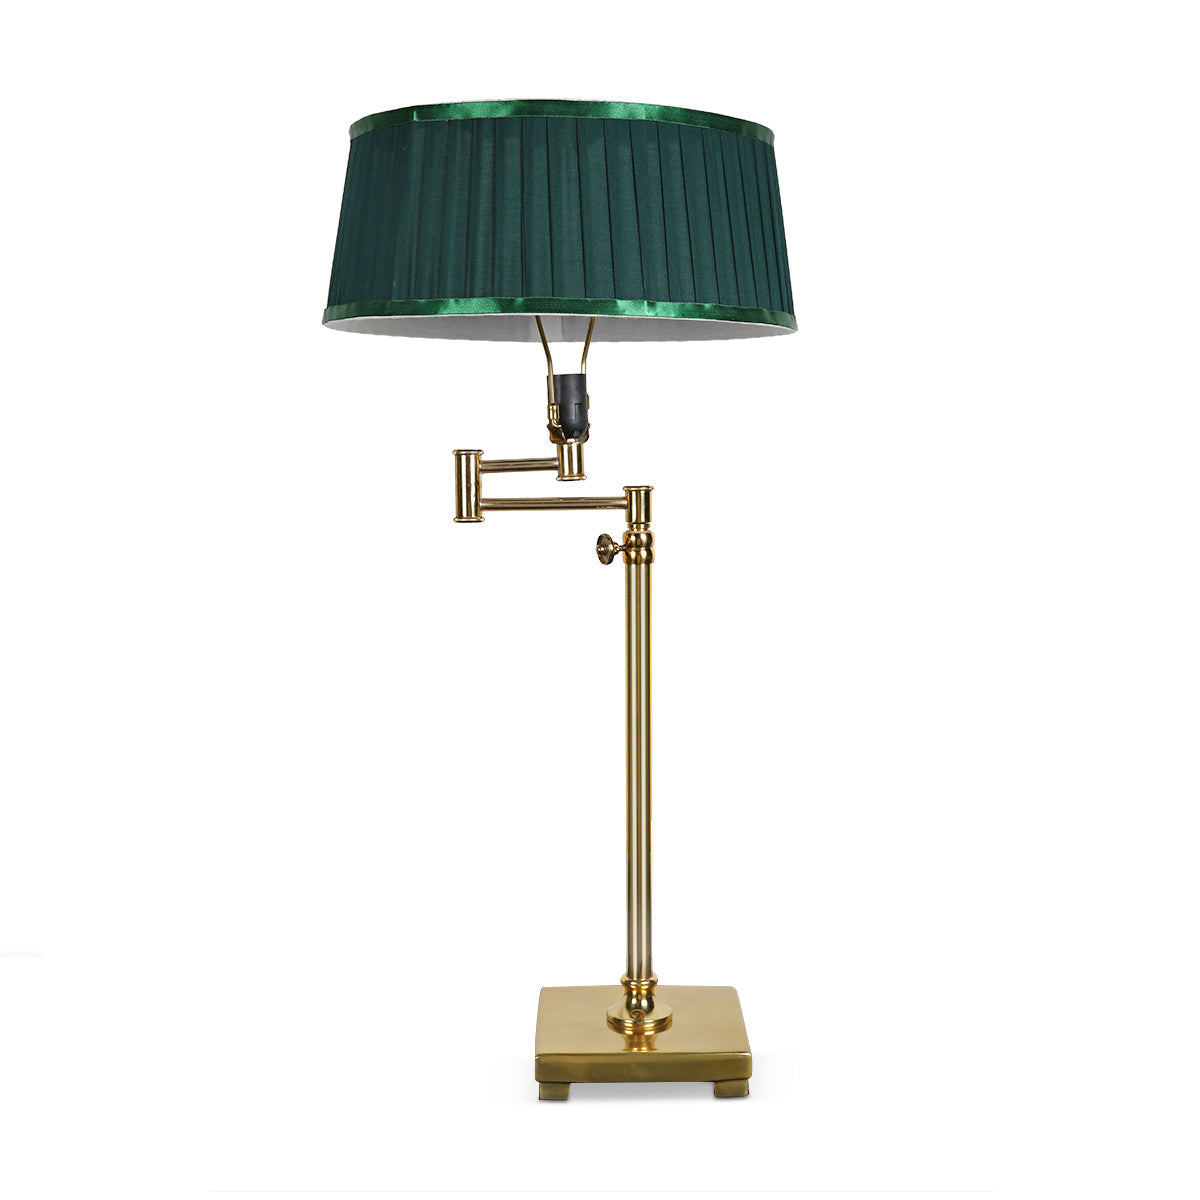 Regolation Table Lamp